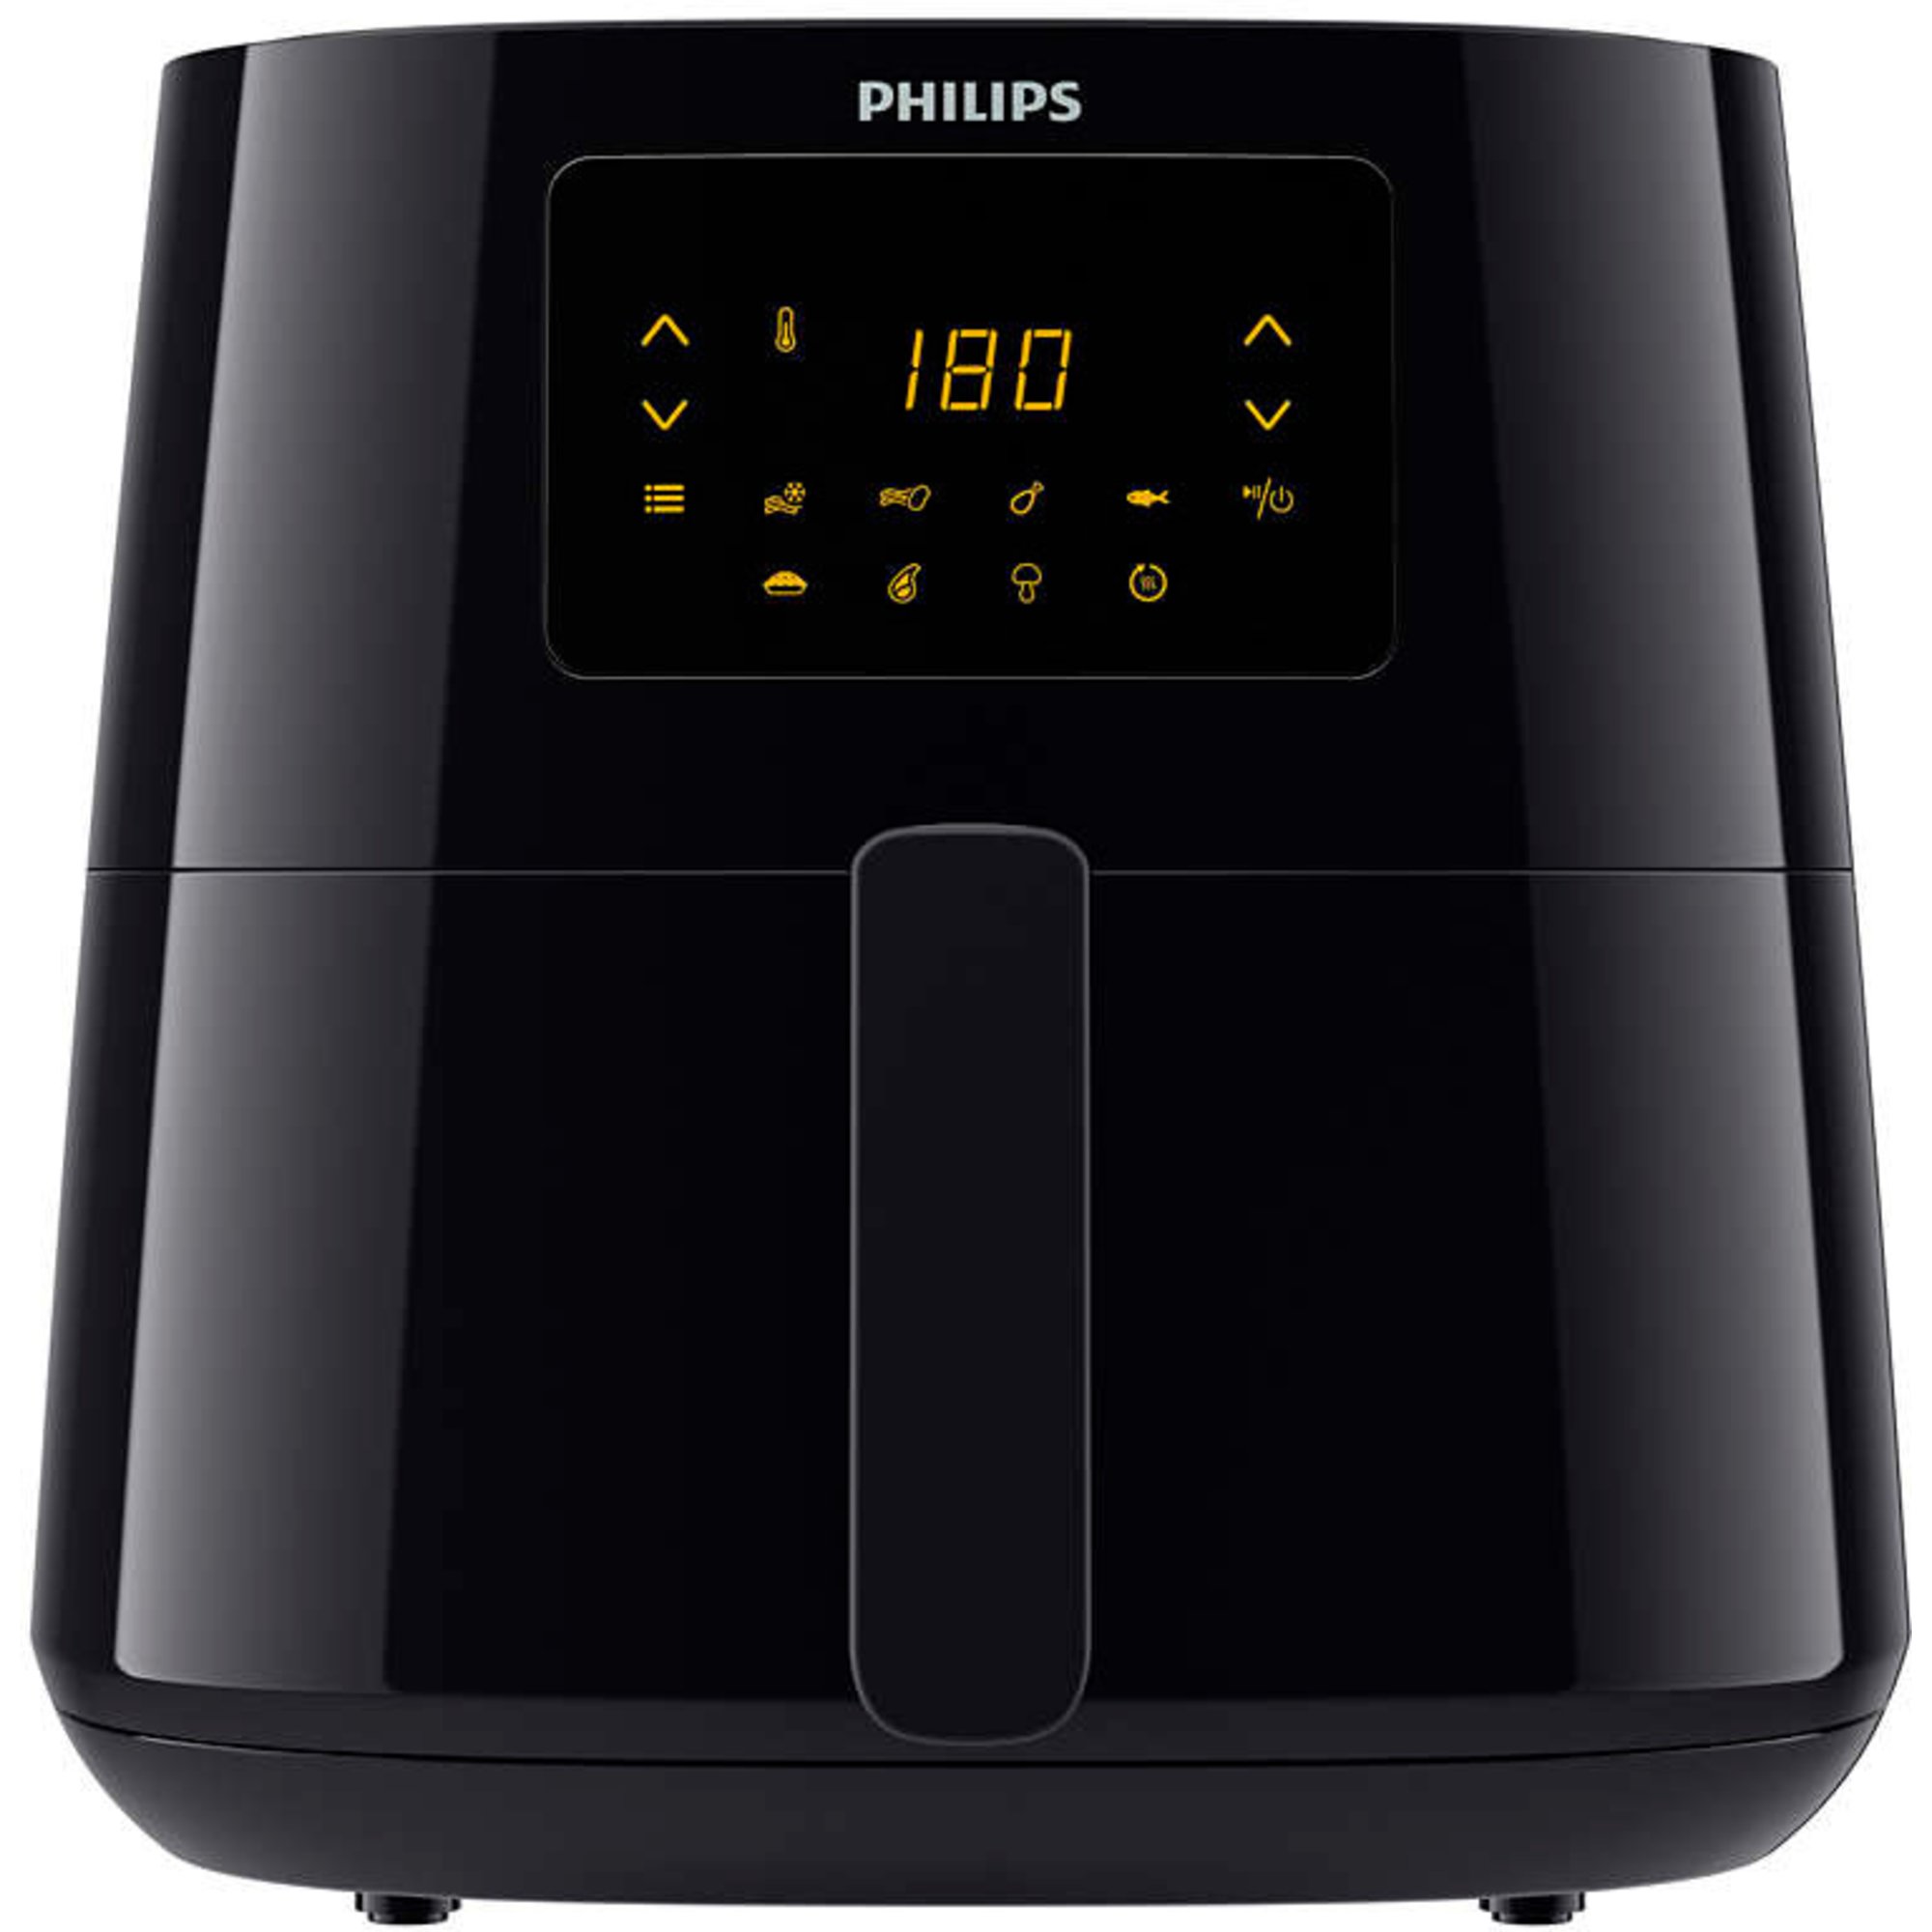 Philips HD9270/96 Airfryer spectre XL w/double